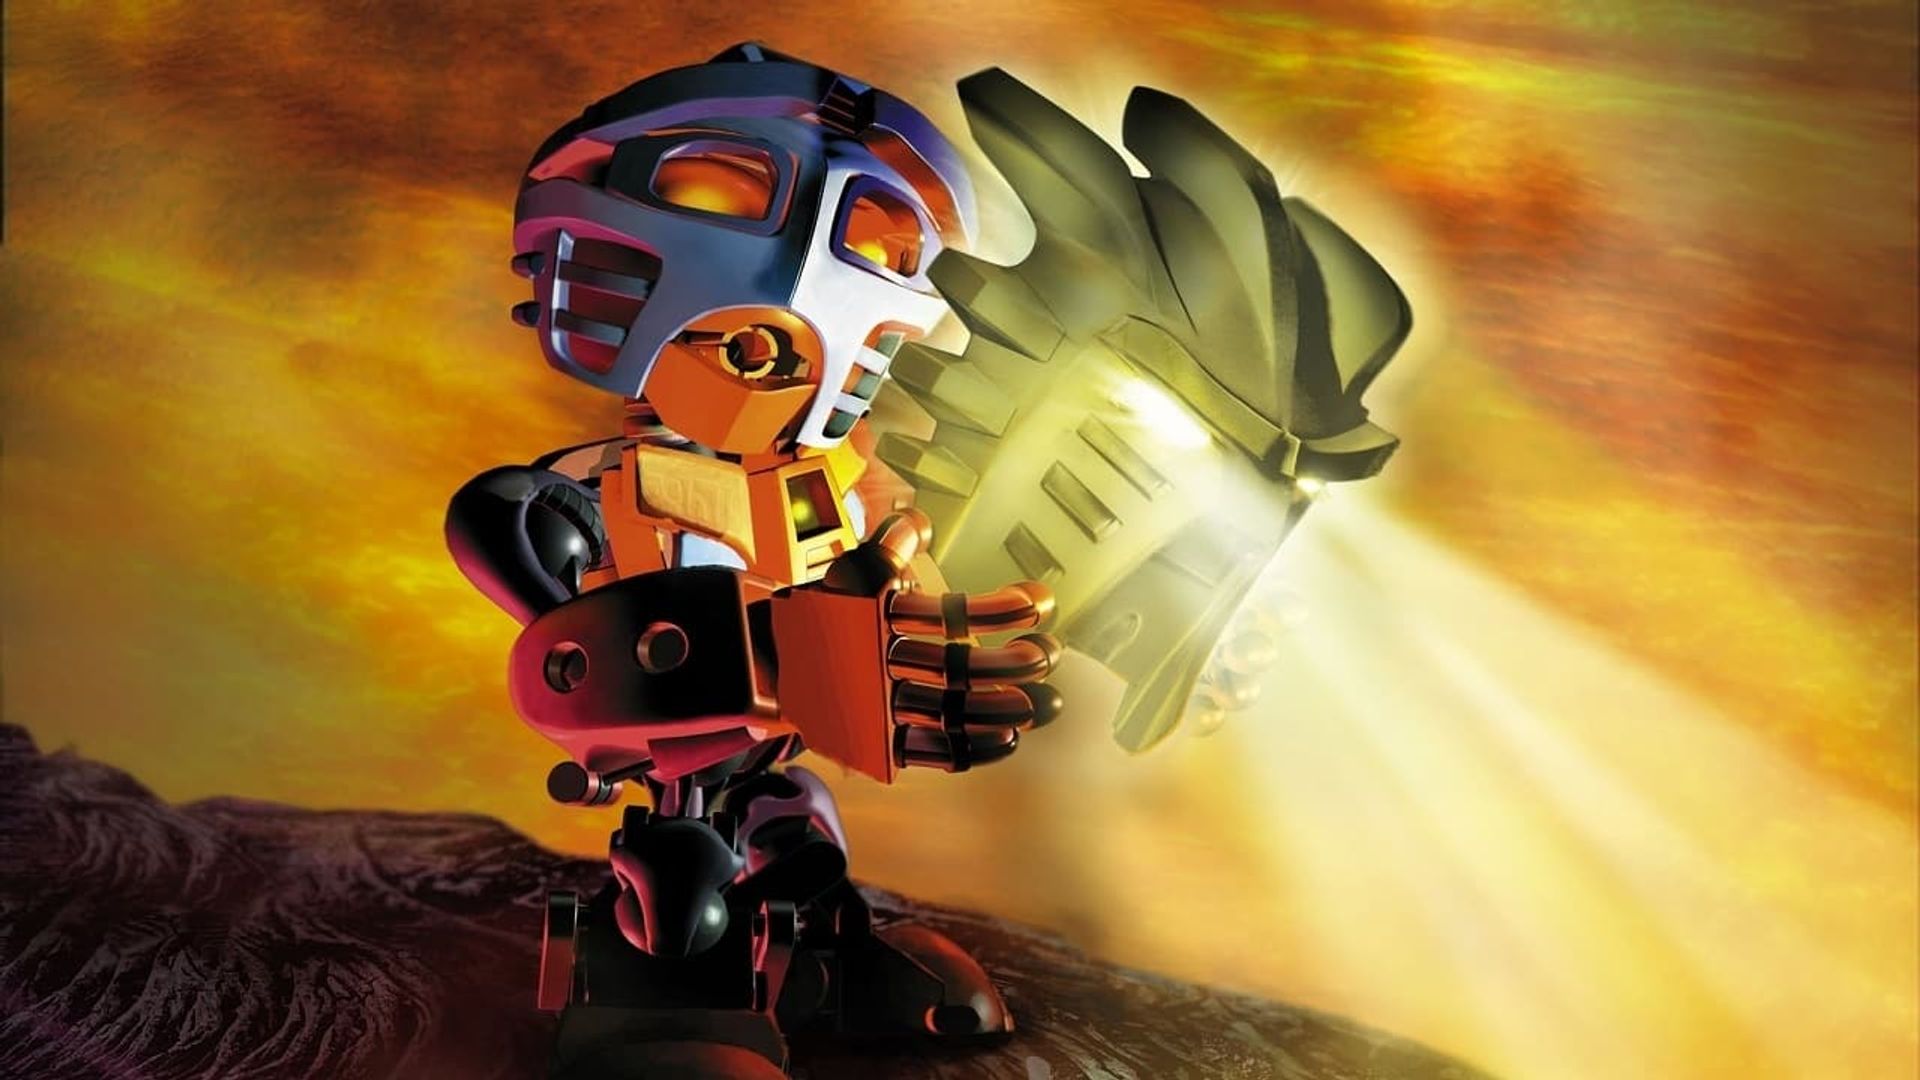 Bionicle: Mask of Light background